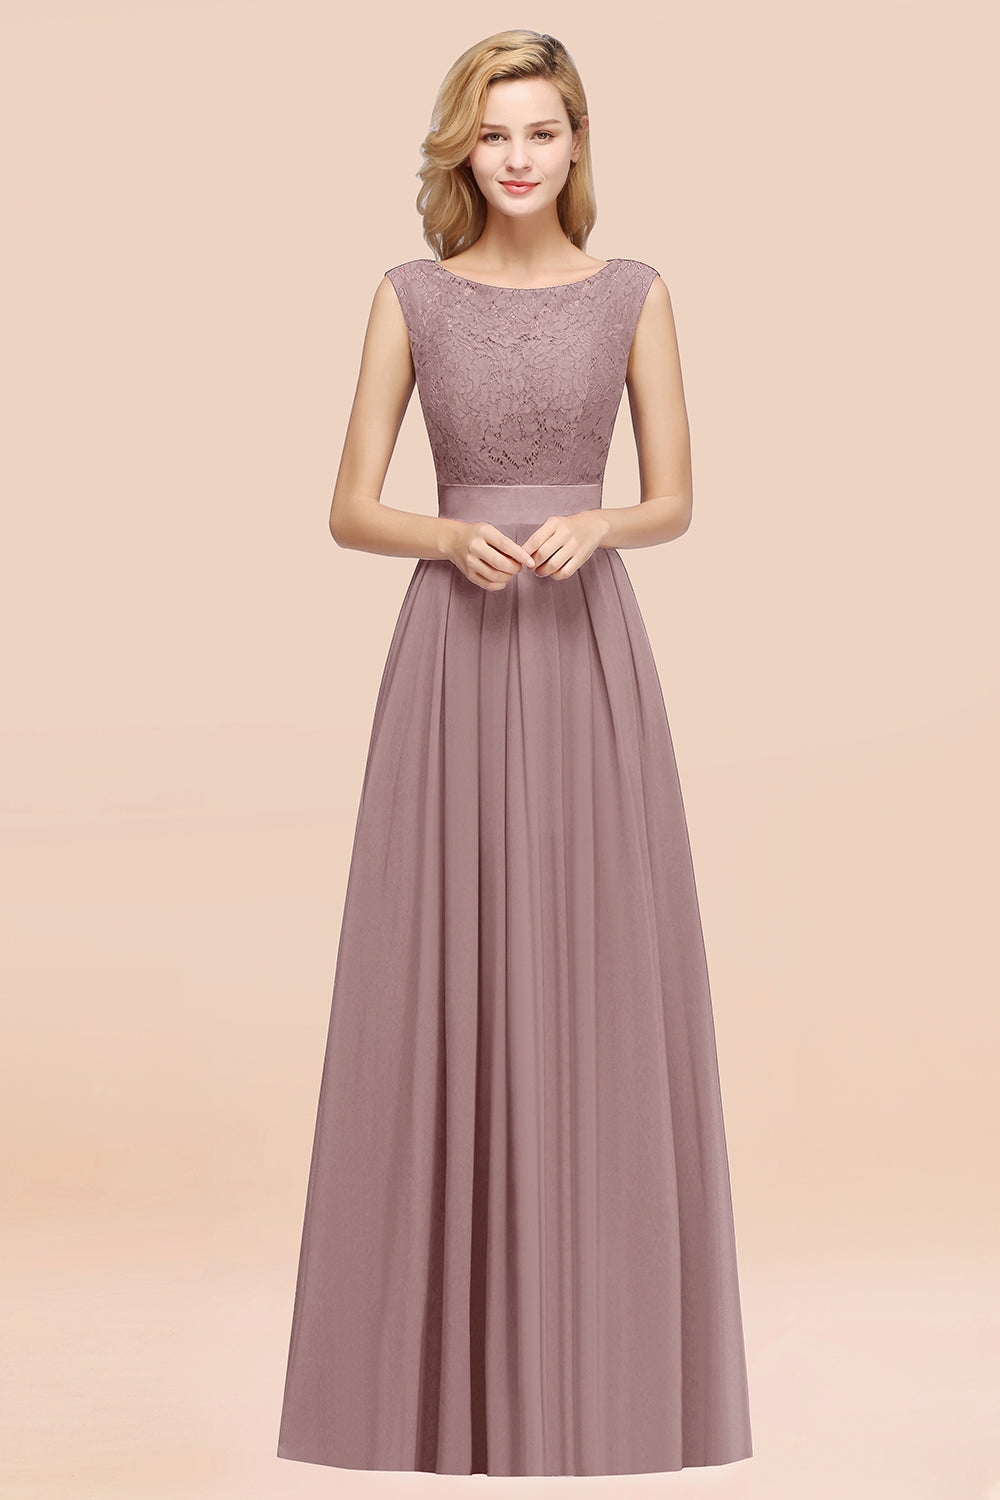 Vintage Sleeveless Lace Bridesmaid Dresses Affordable Chiffon Wedding Party Dress Online-27dress